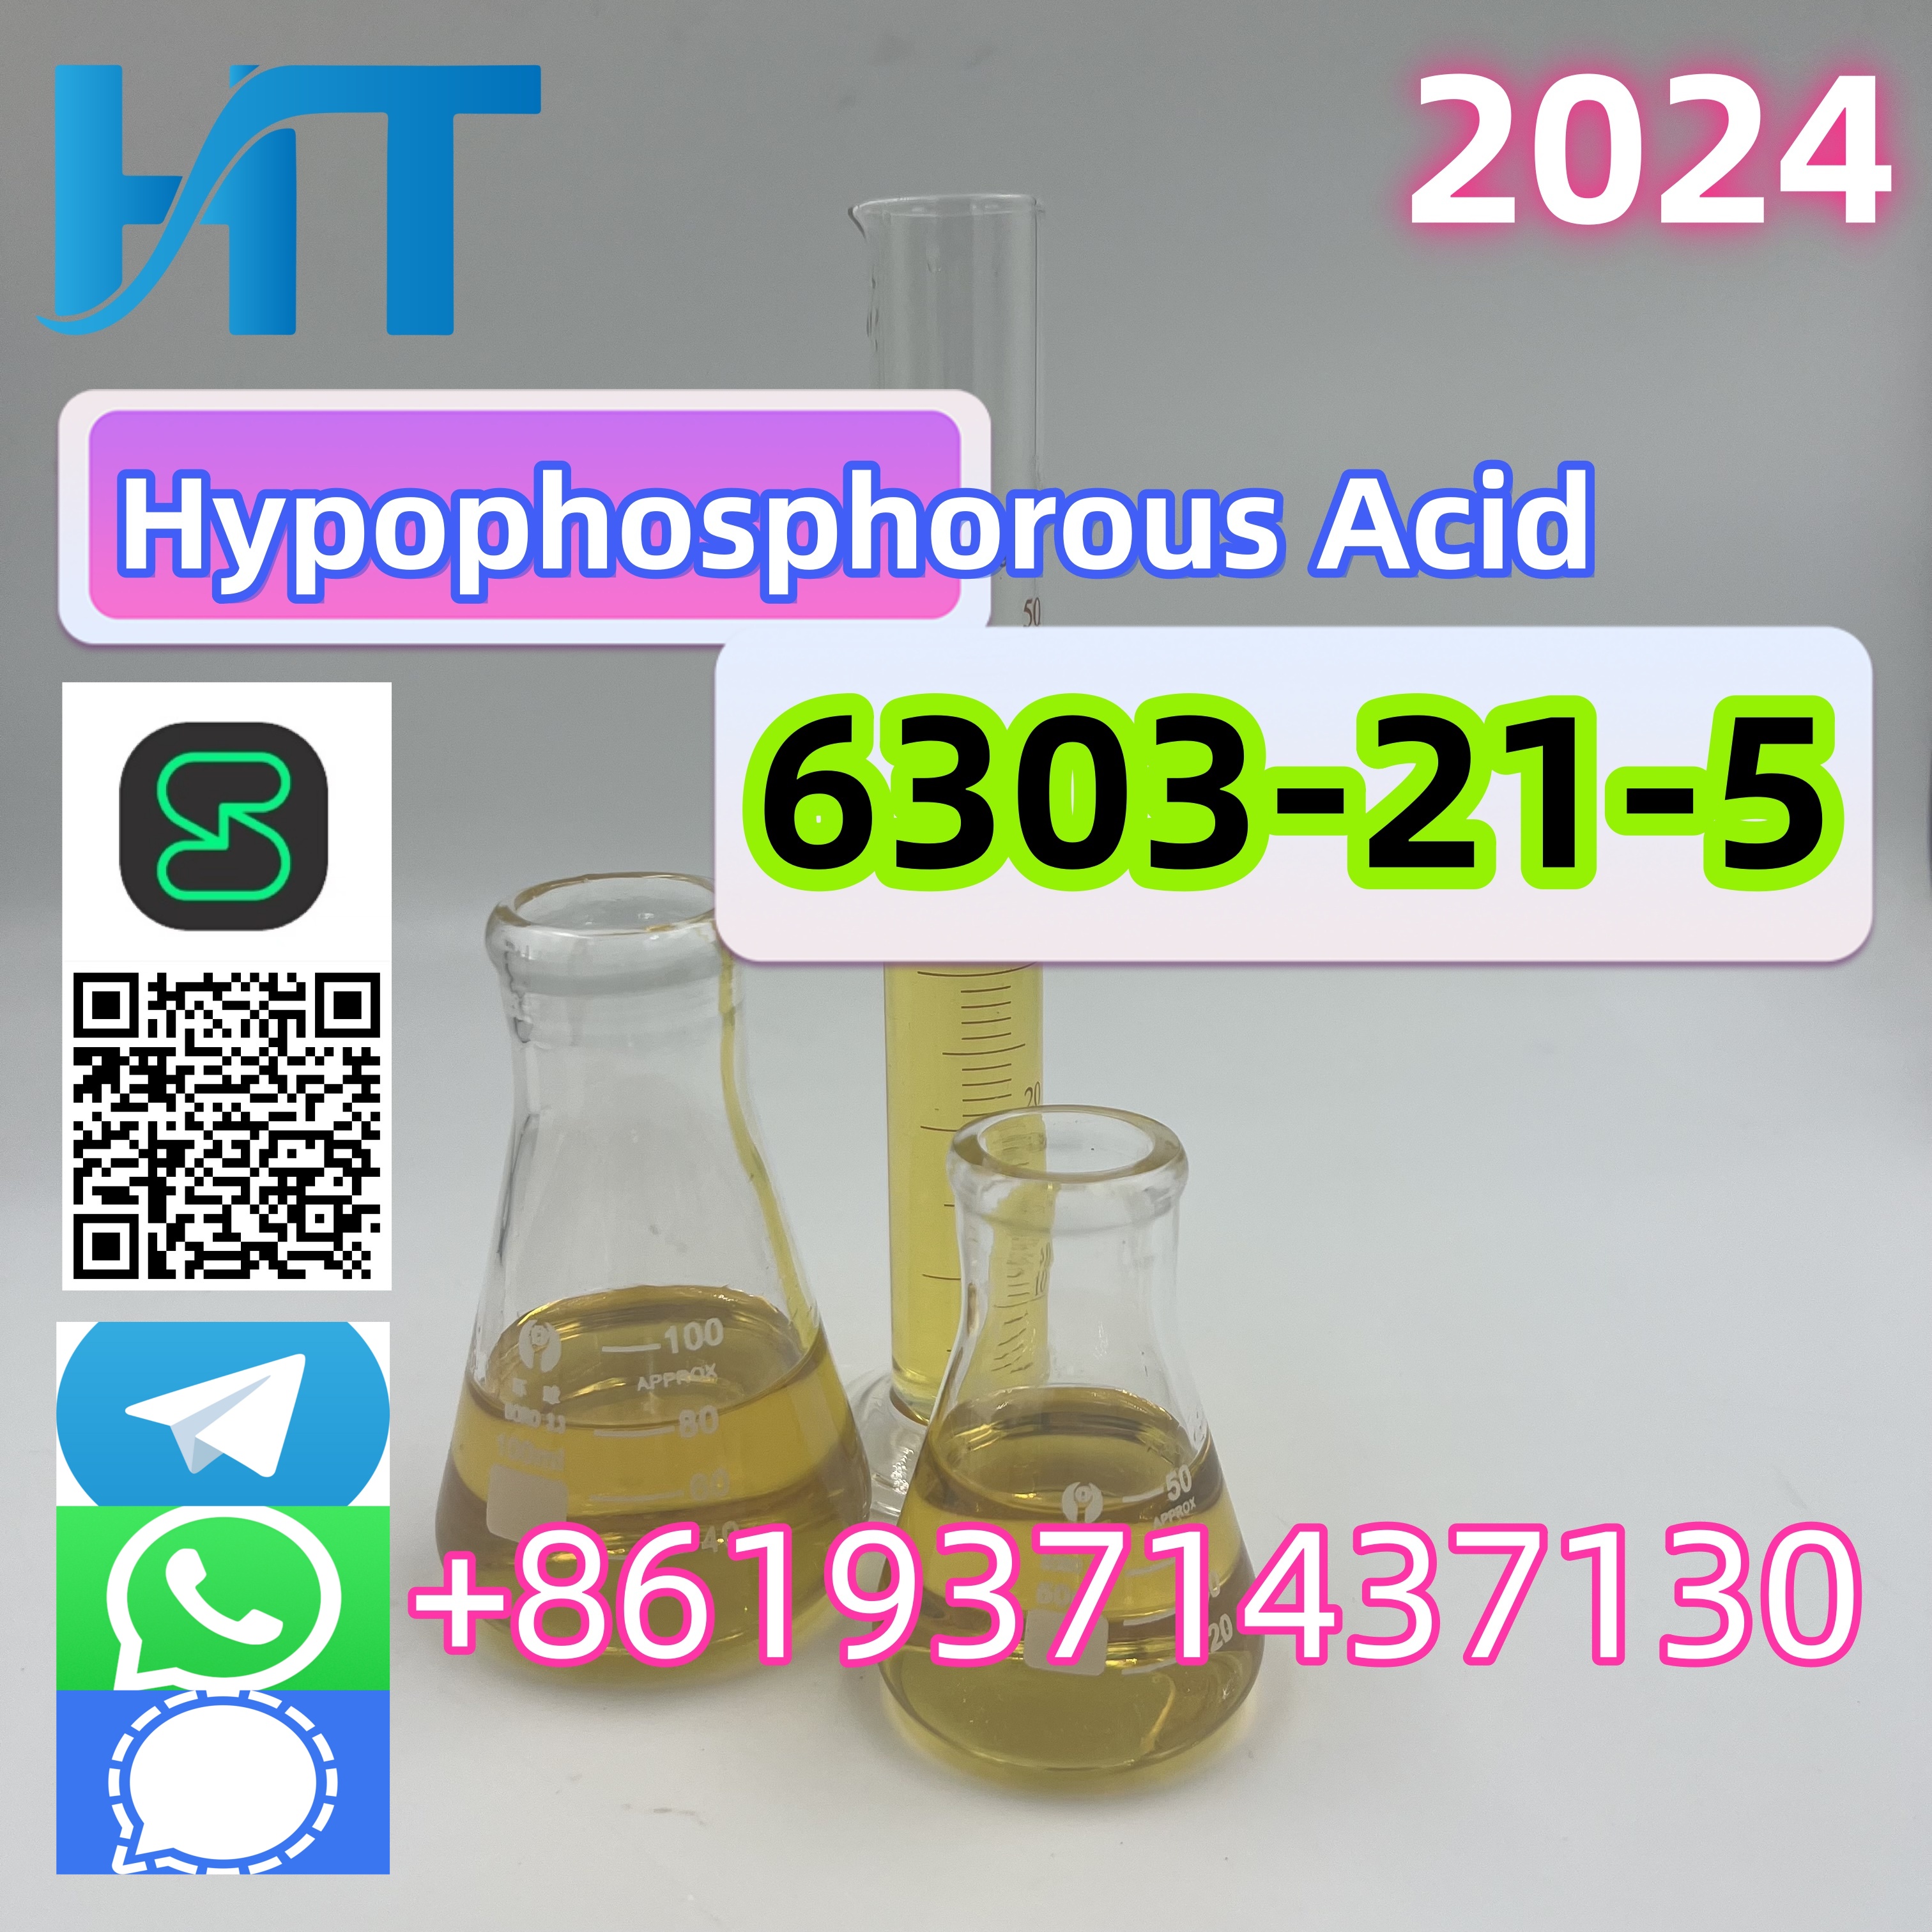 Double clearance 6303-21-5 Hypophosphorous Acid H3PO2